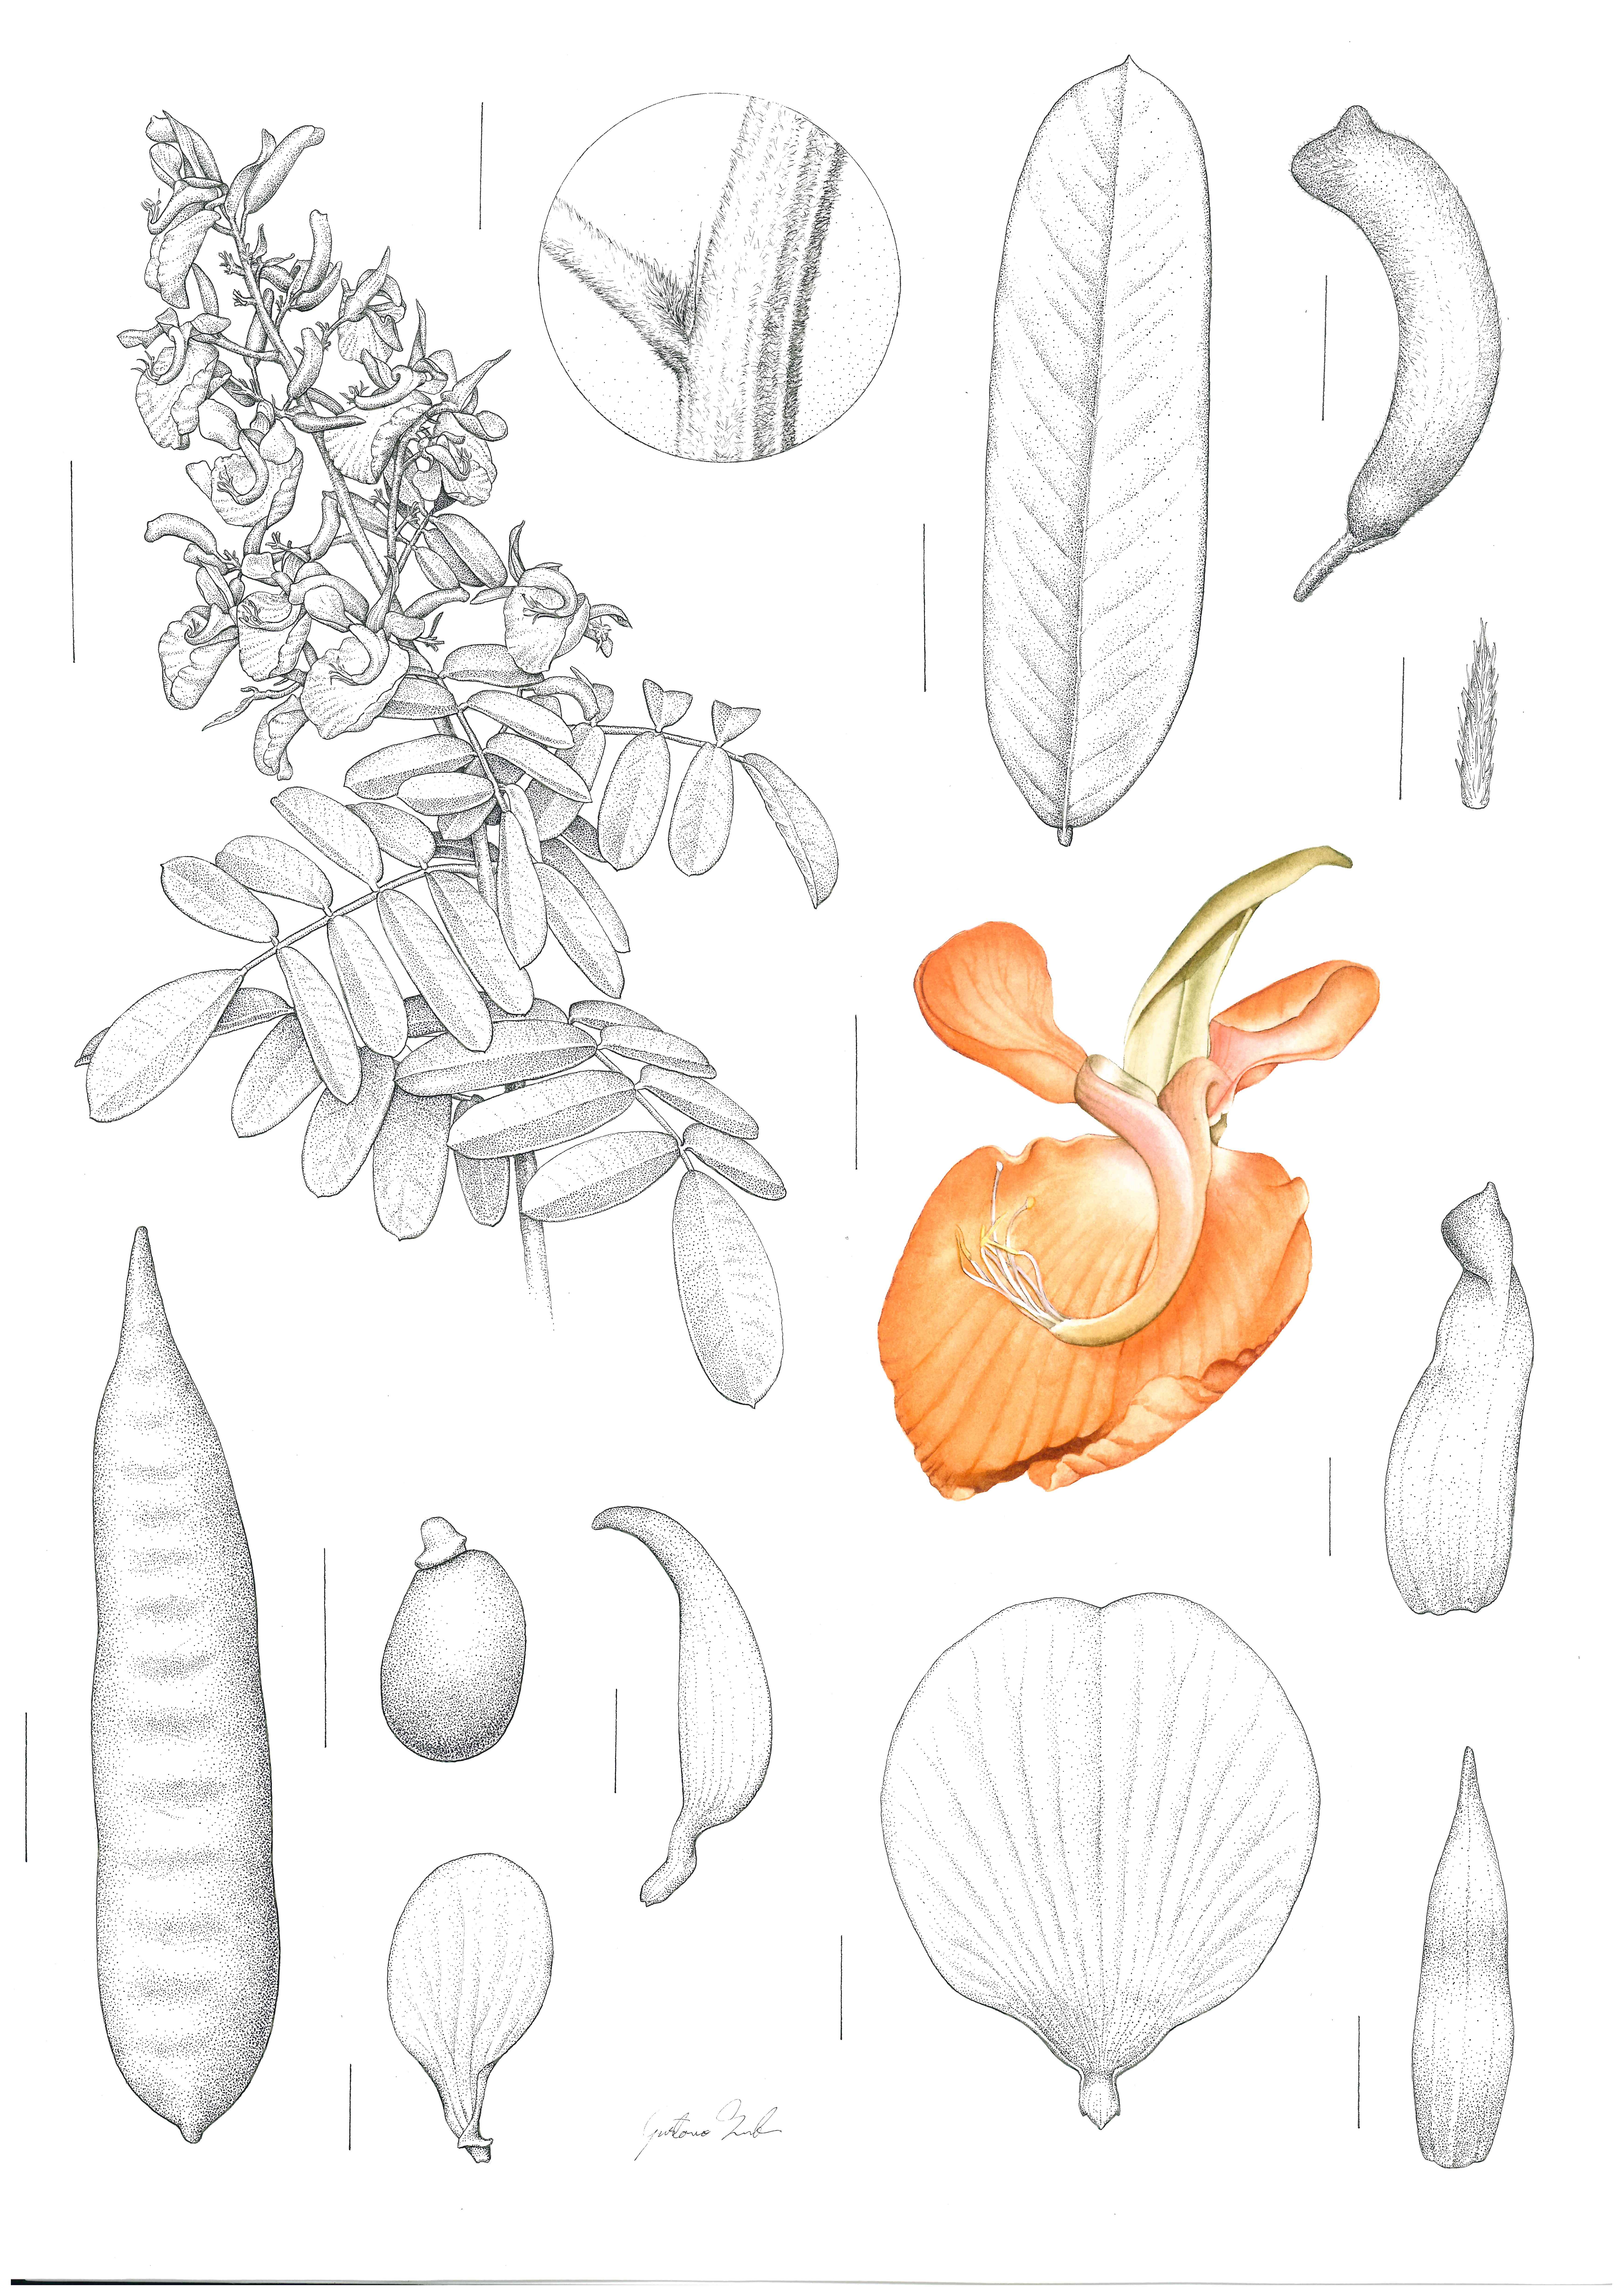 Botanical illustration of *Harpalyce*